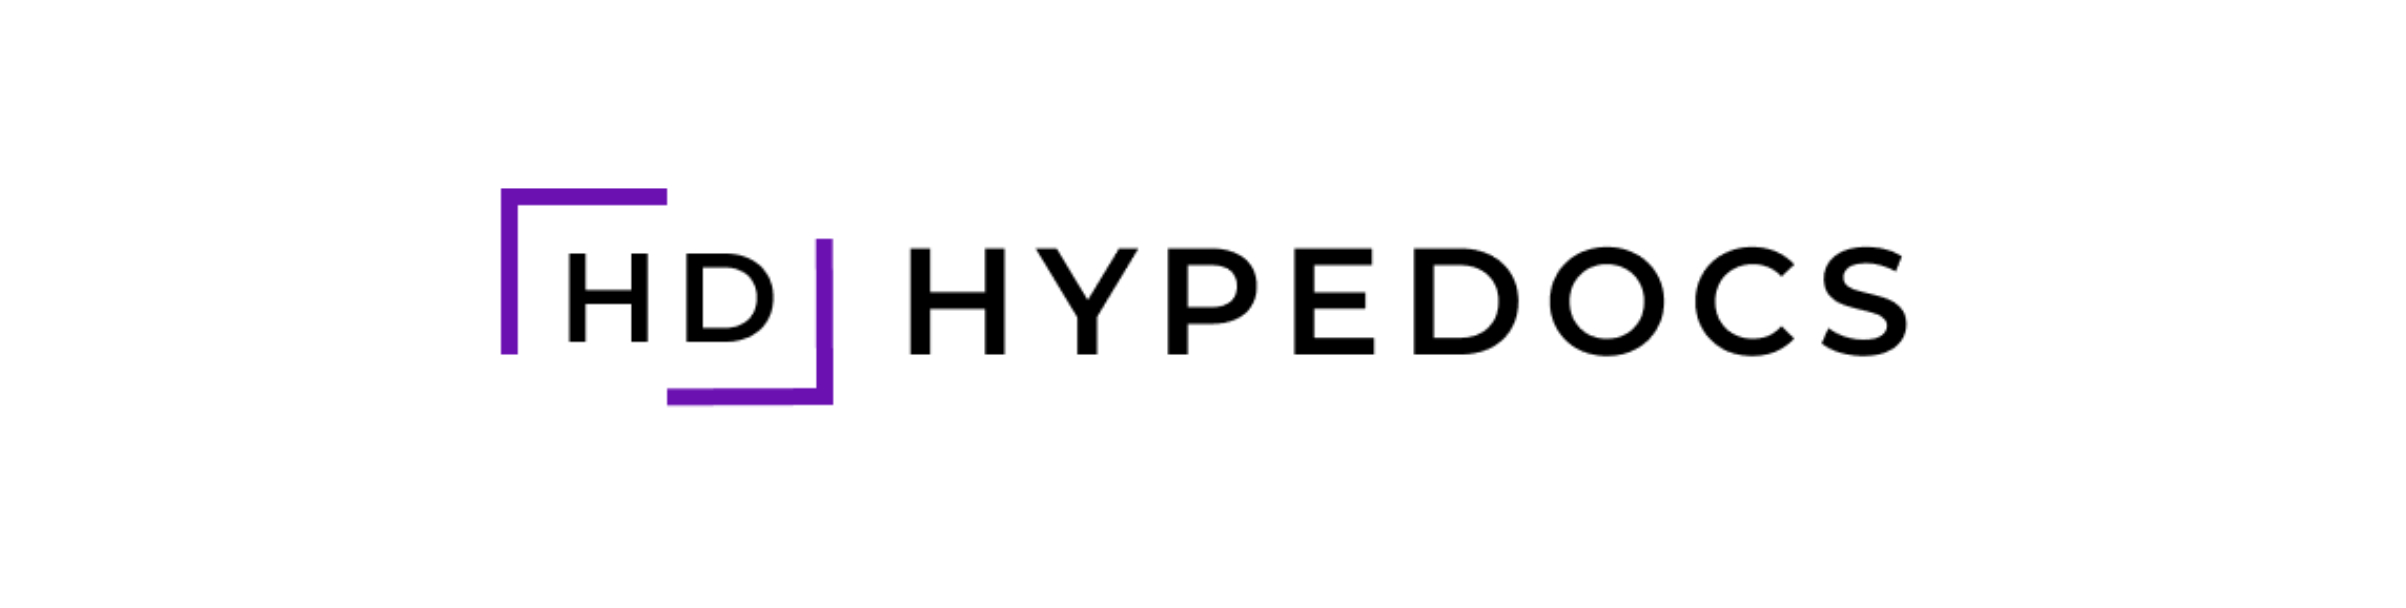 HypeDocs logo